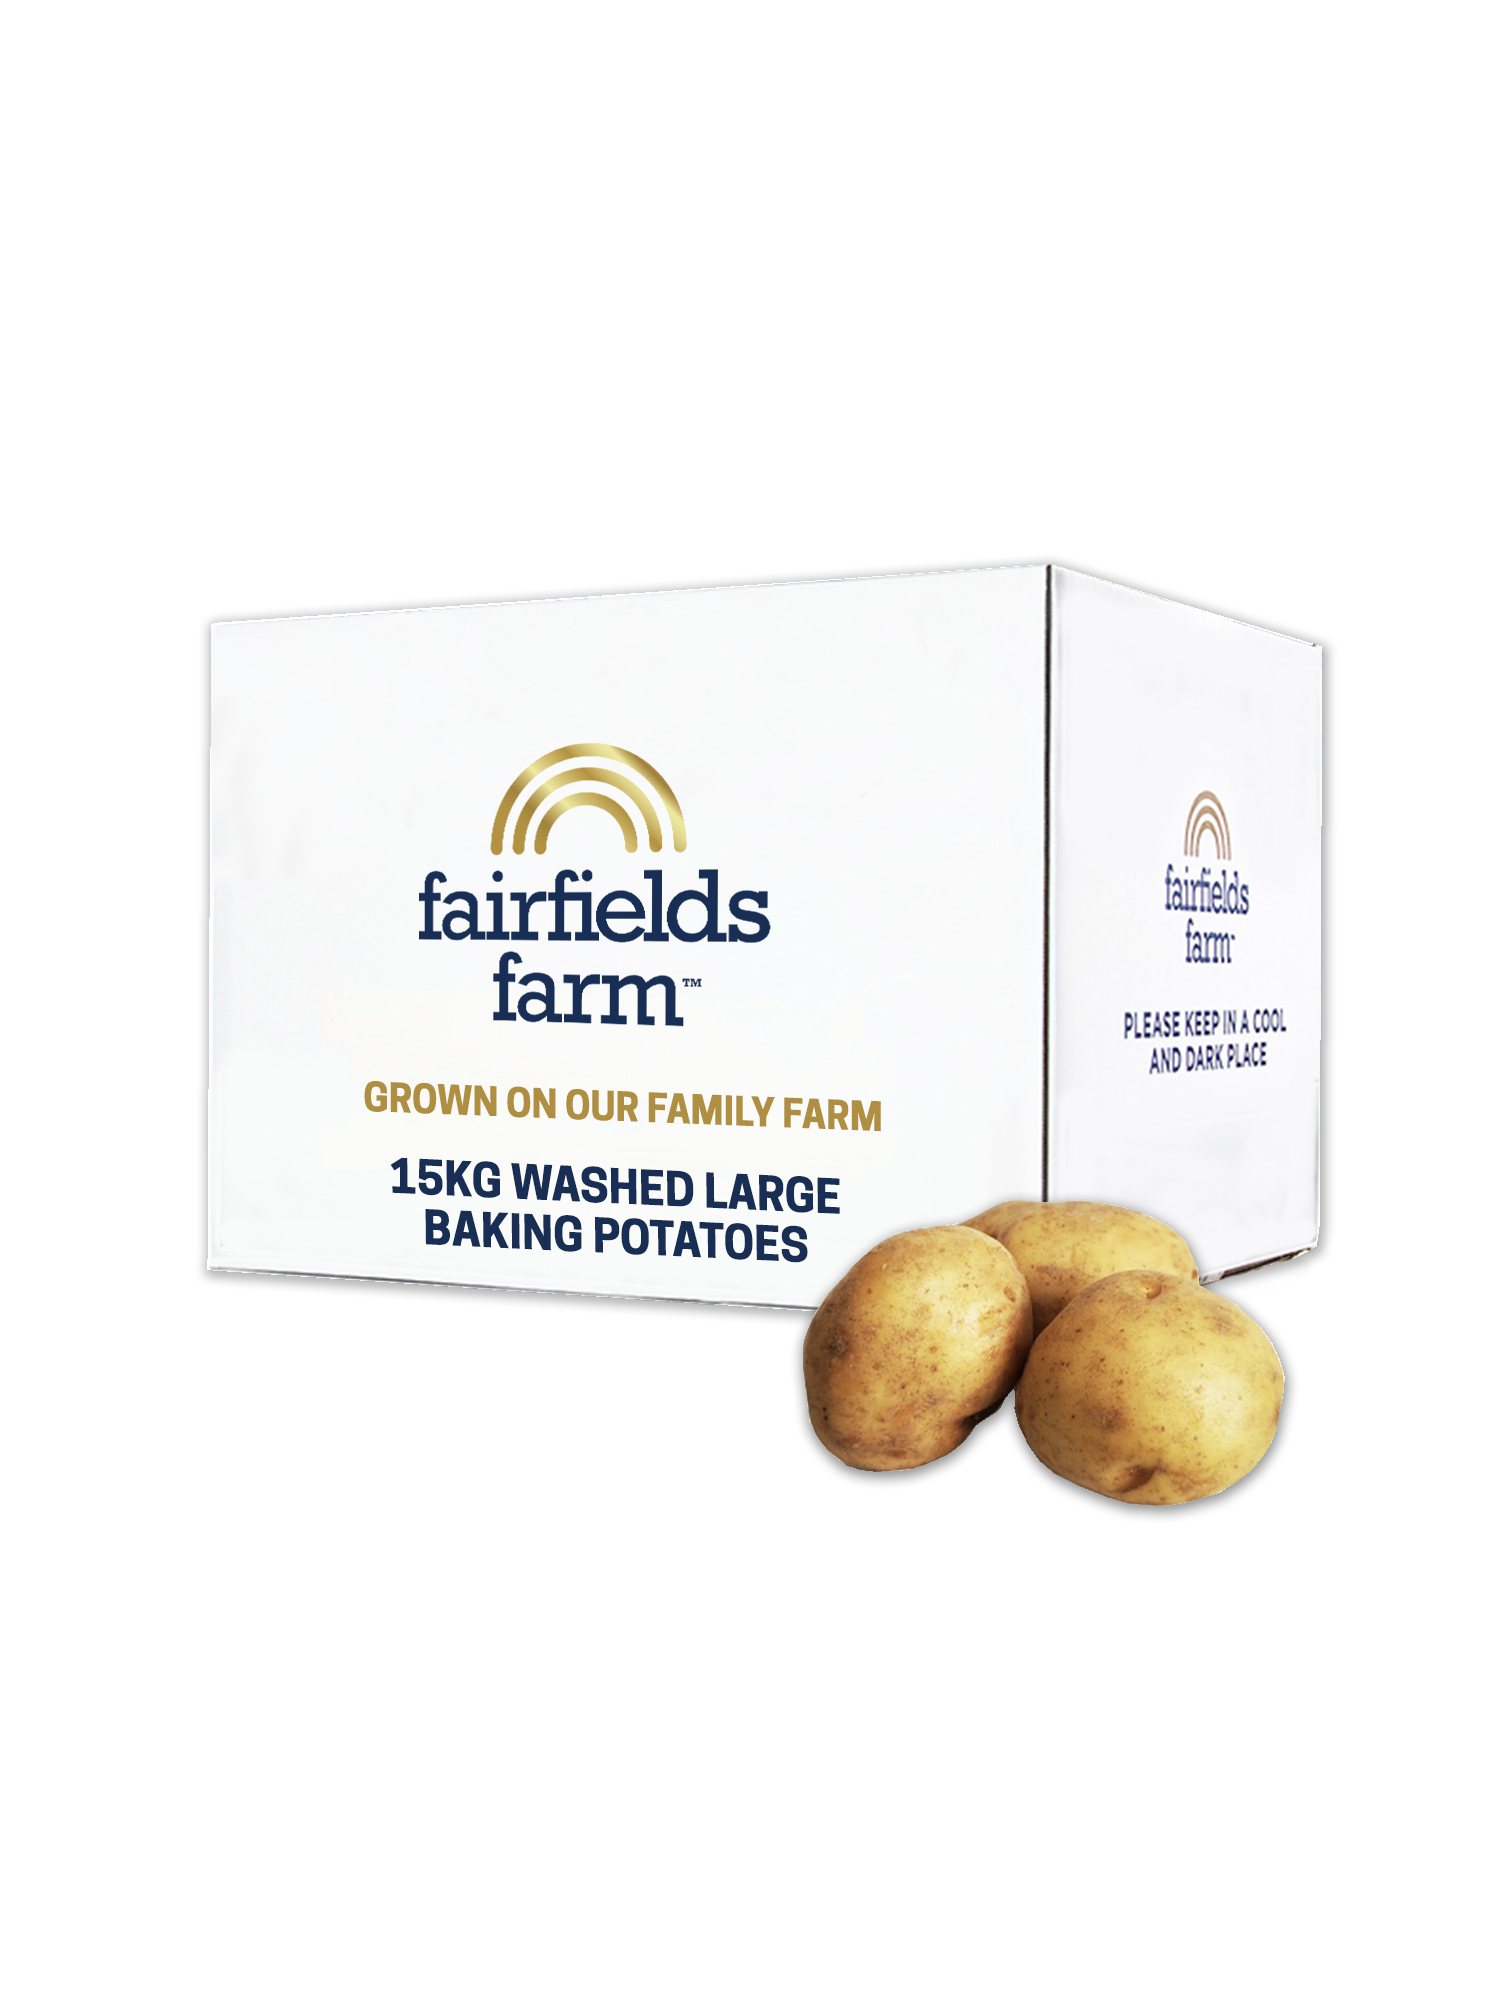 15kg Of Washed Large Baking Potatoes – 15kg Of Washed Large Baking Potatoes